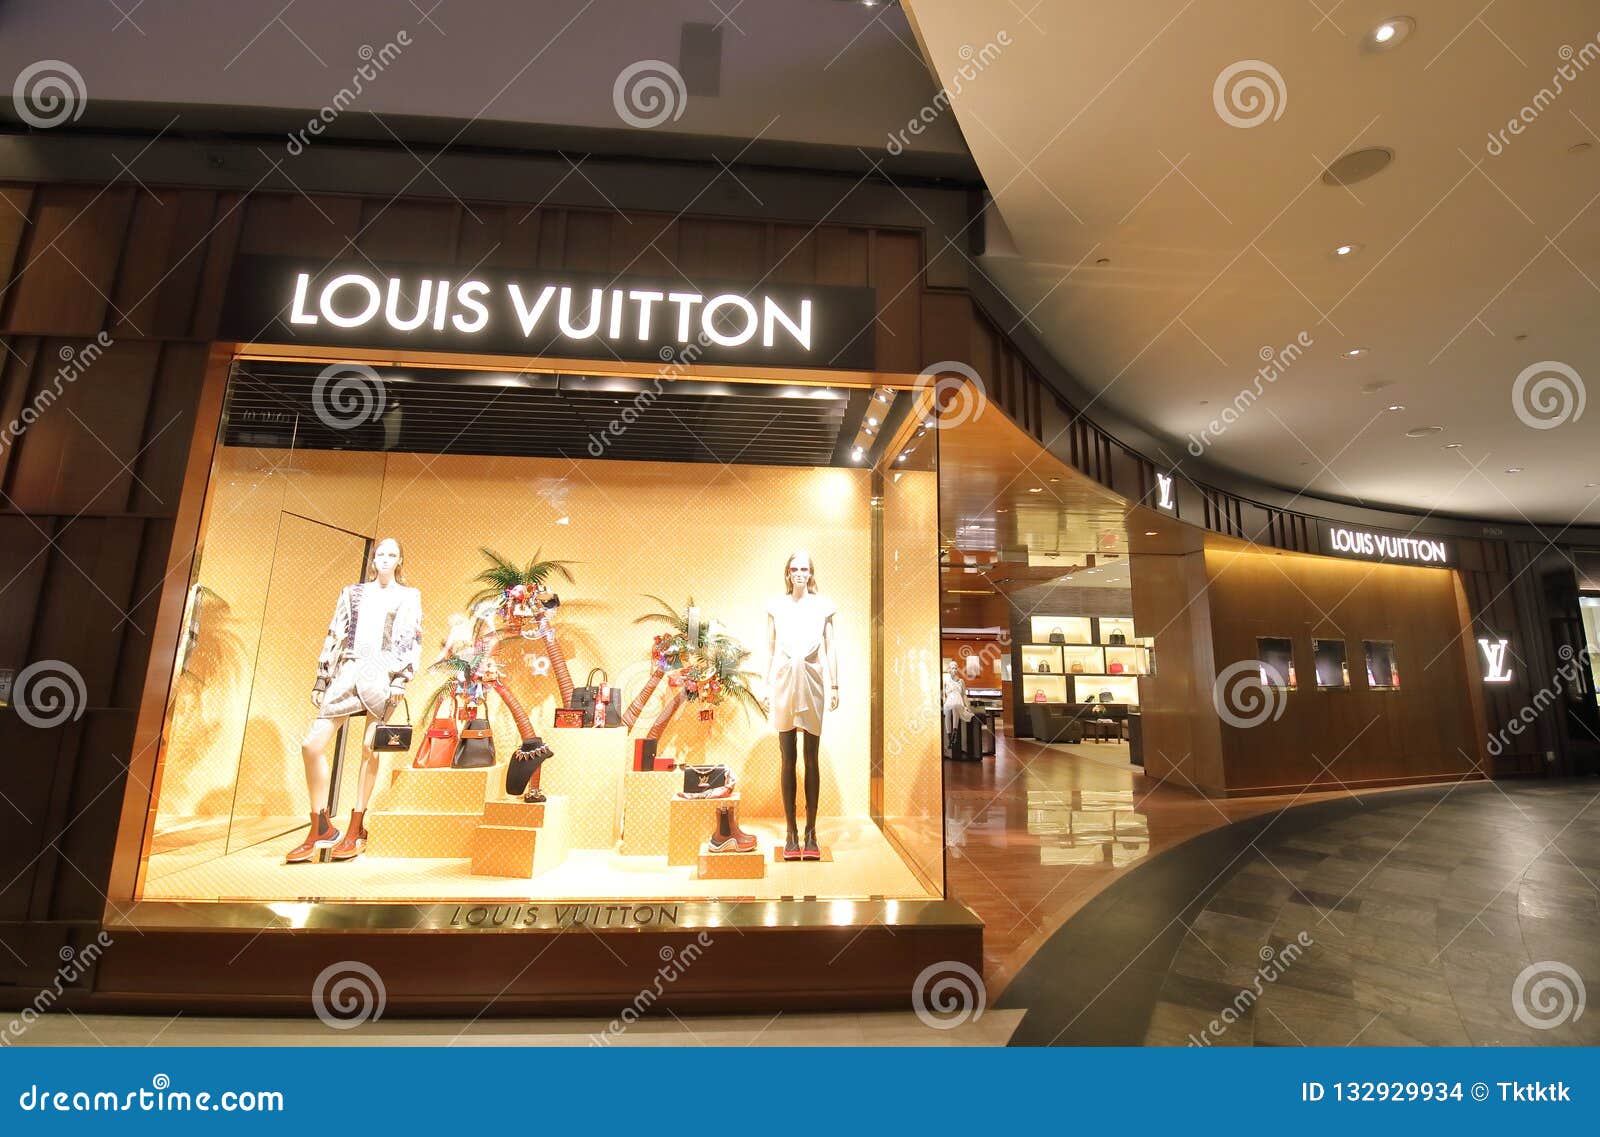 Louis Vuitton Fashion Brand Editorial Stock Image - Image of marina,  tourism: 132929934